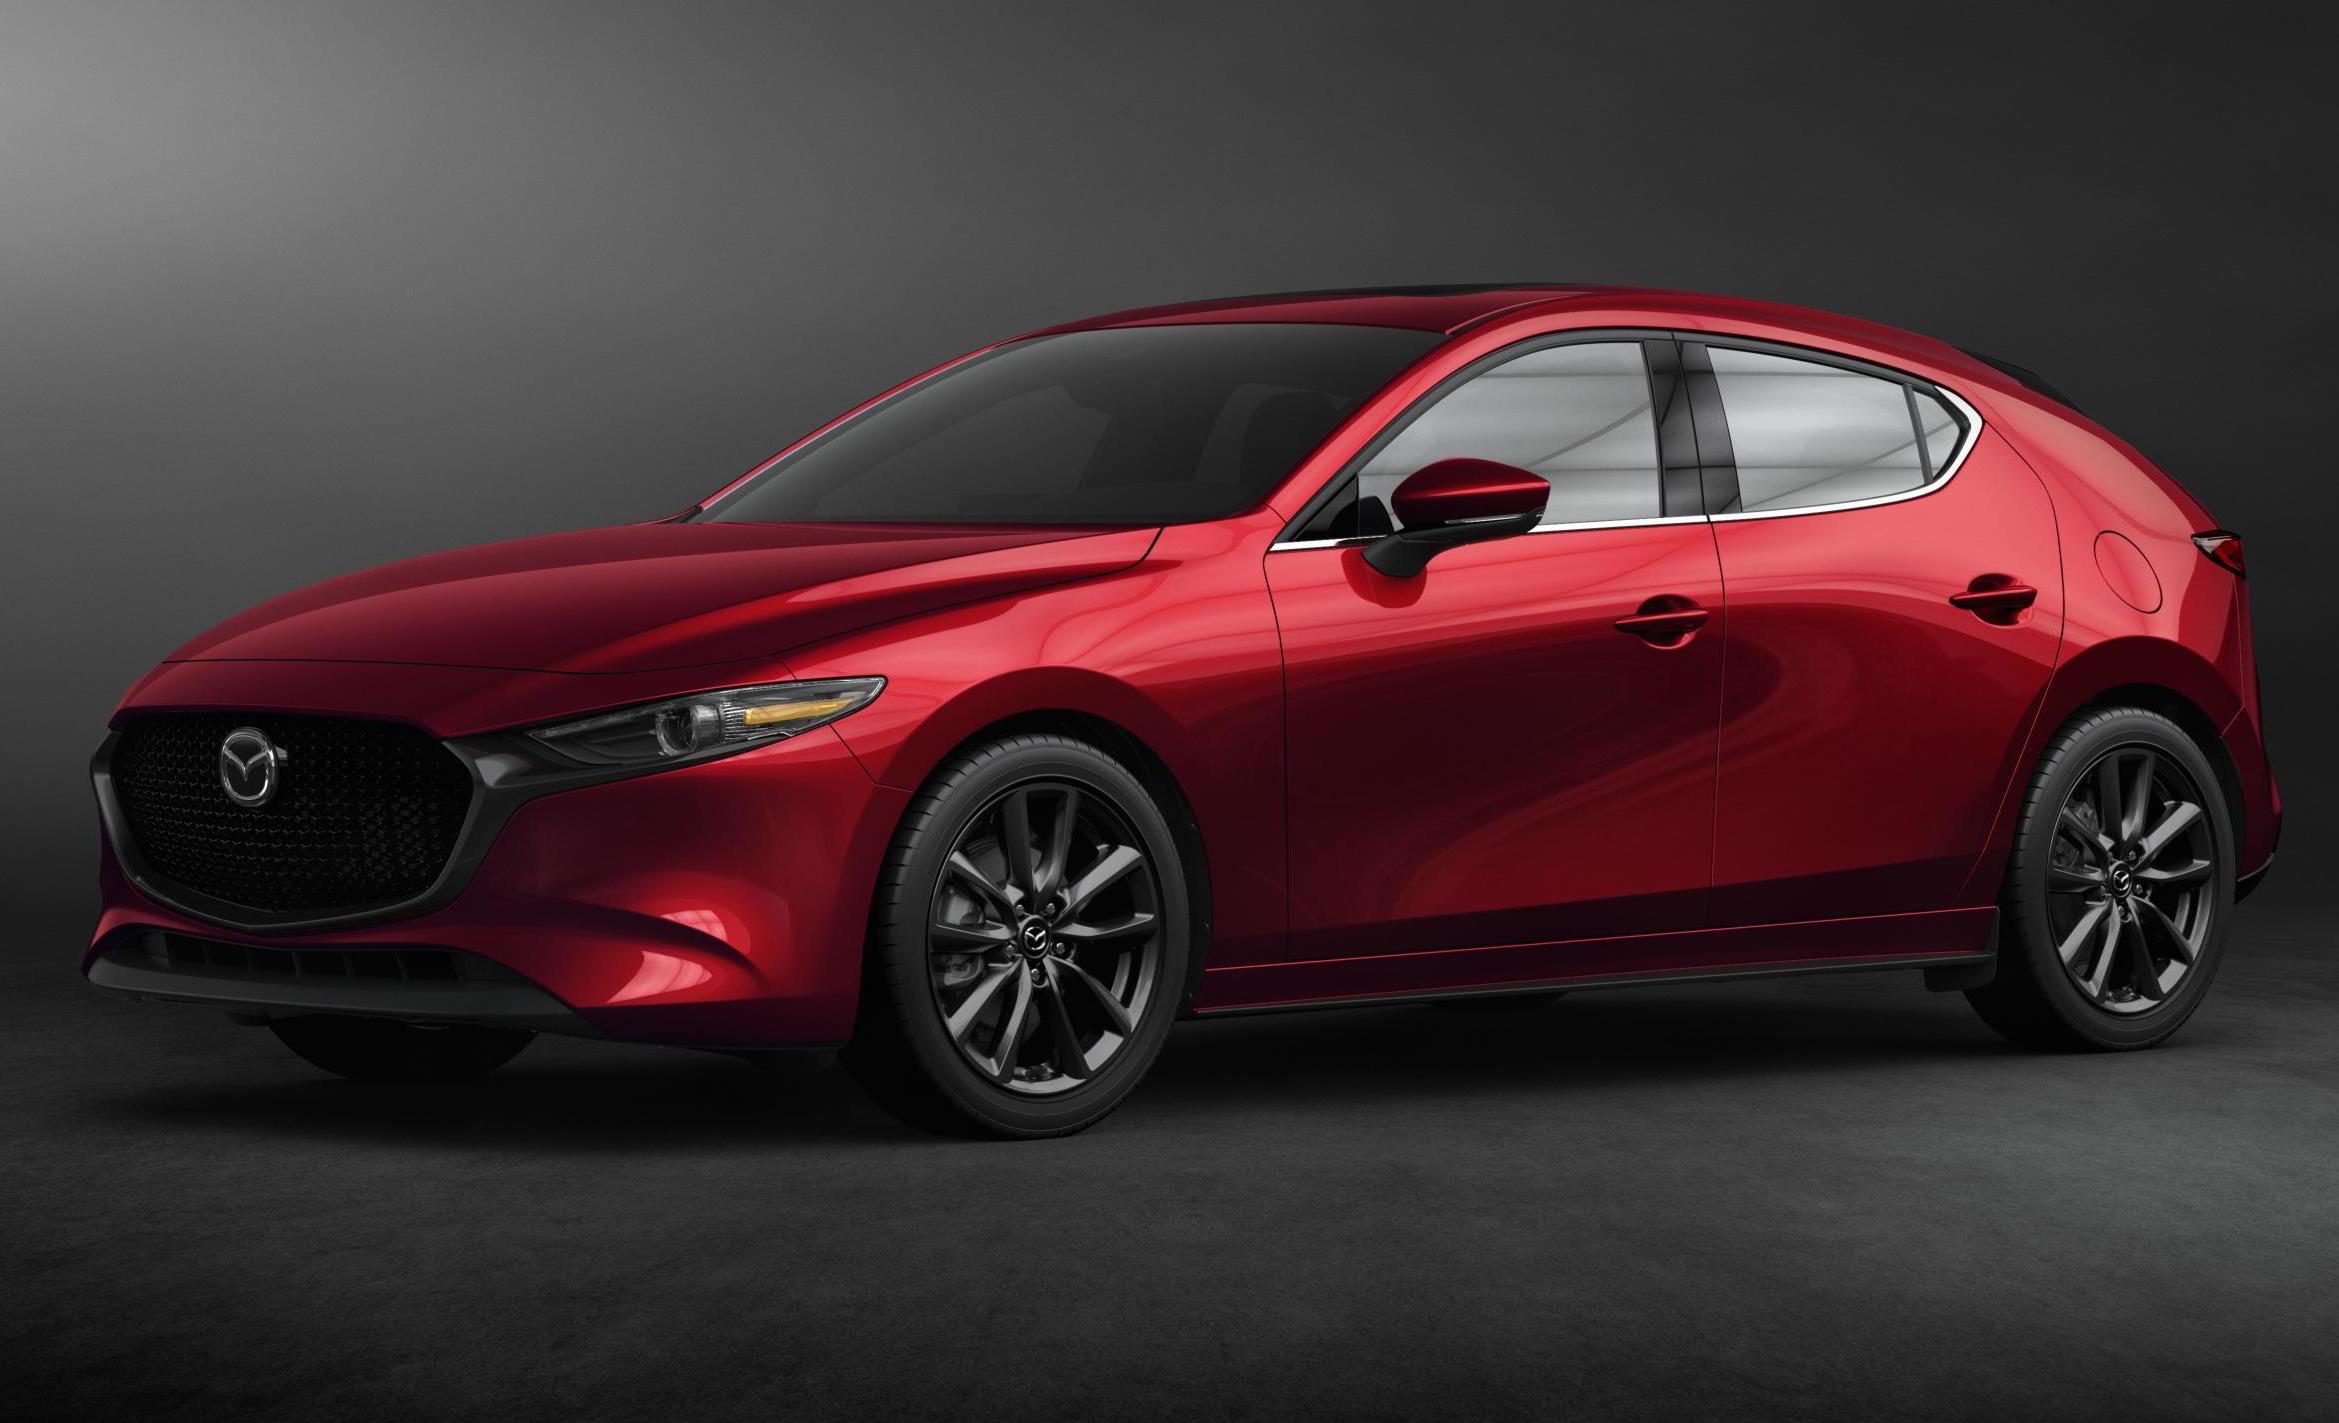 2019 Mazda3 officially revealed, debuts SkyActiv-X